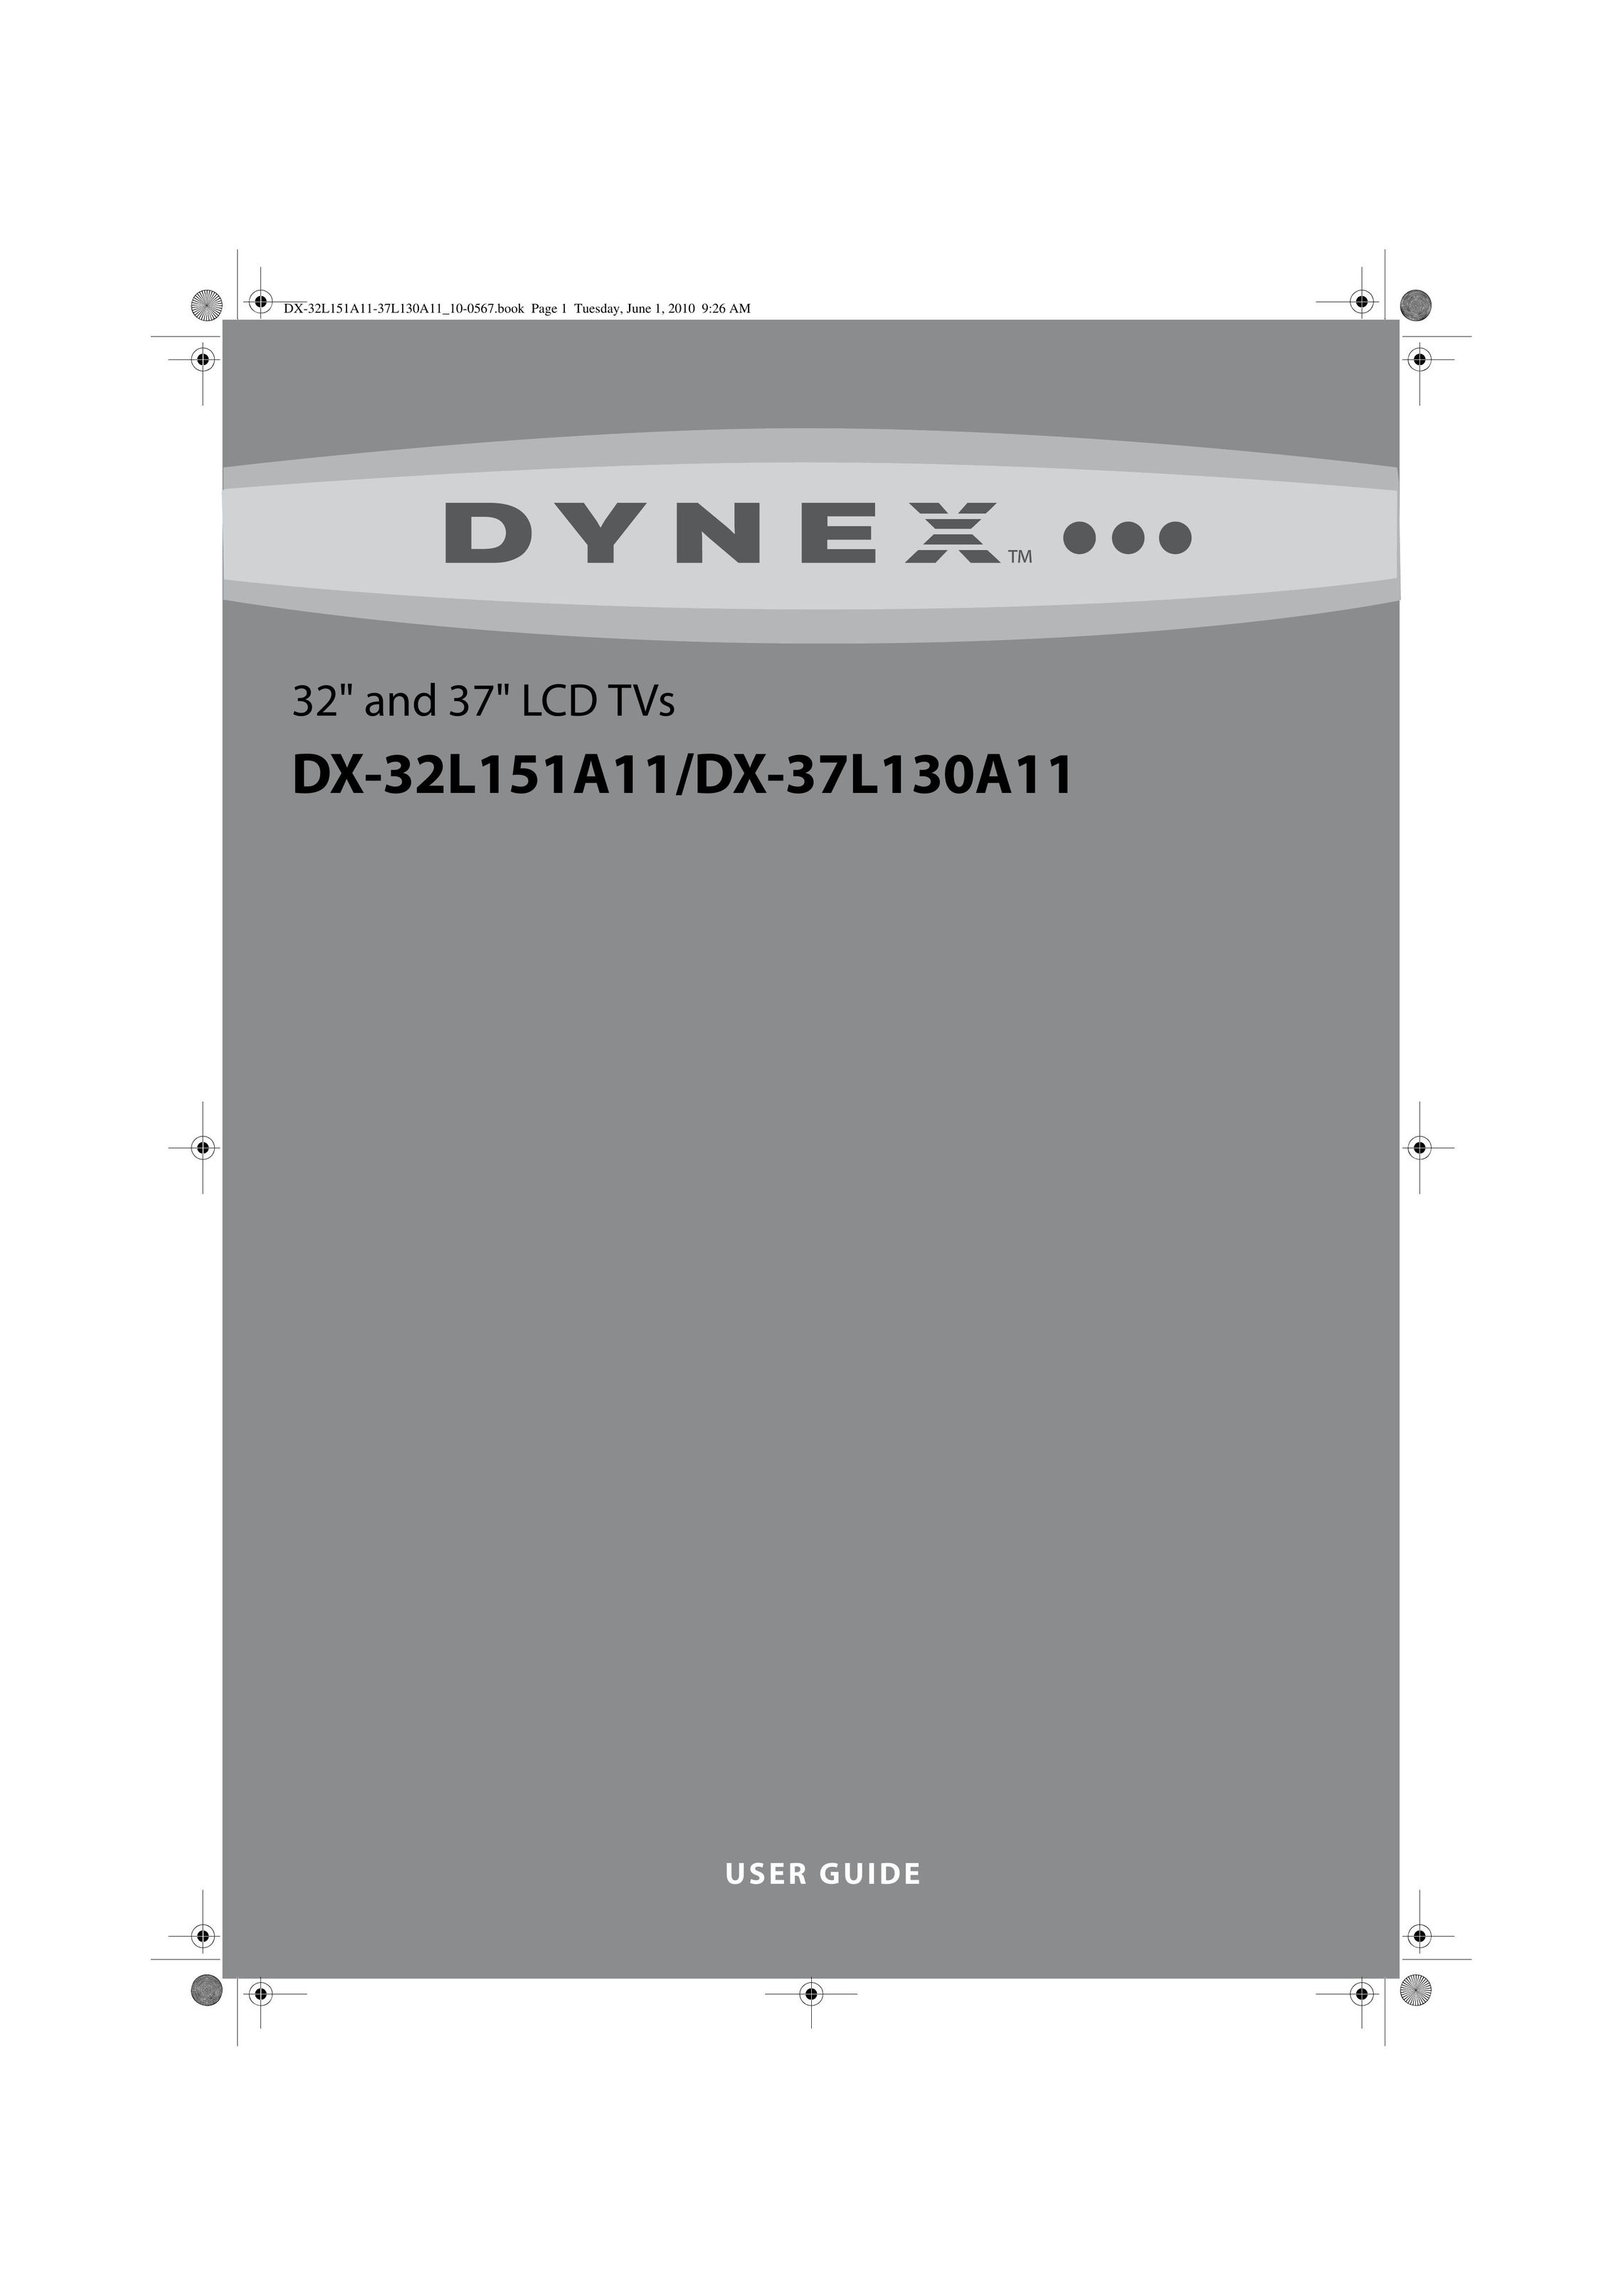 Dynex DX-37L130A11 Flat Panel Television User Manual